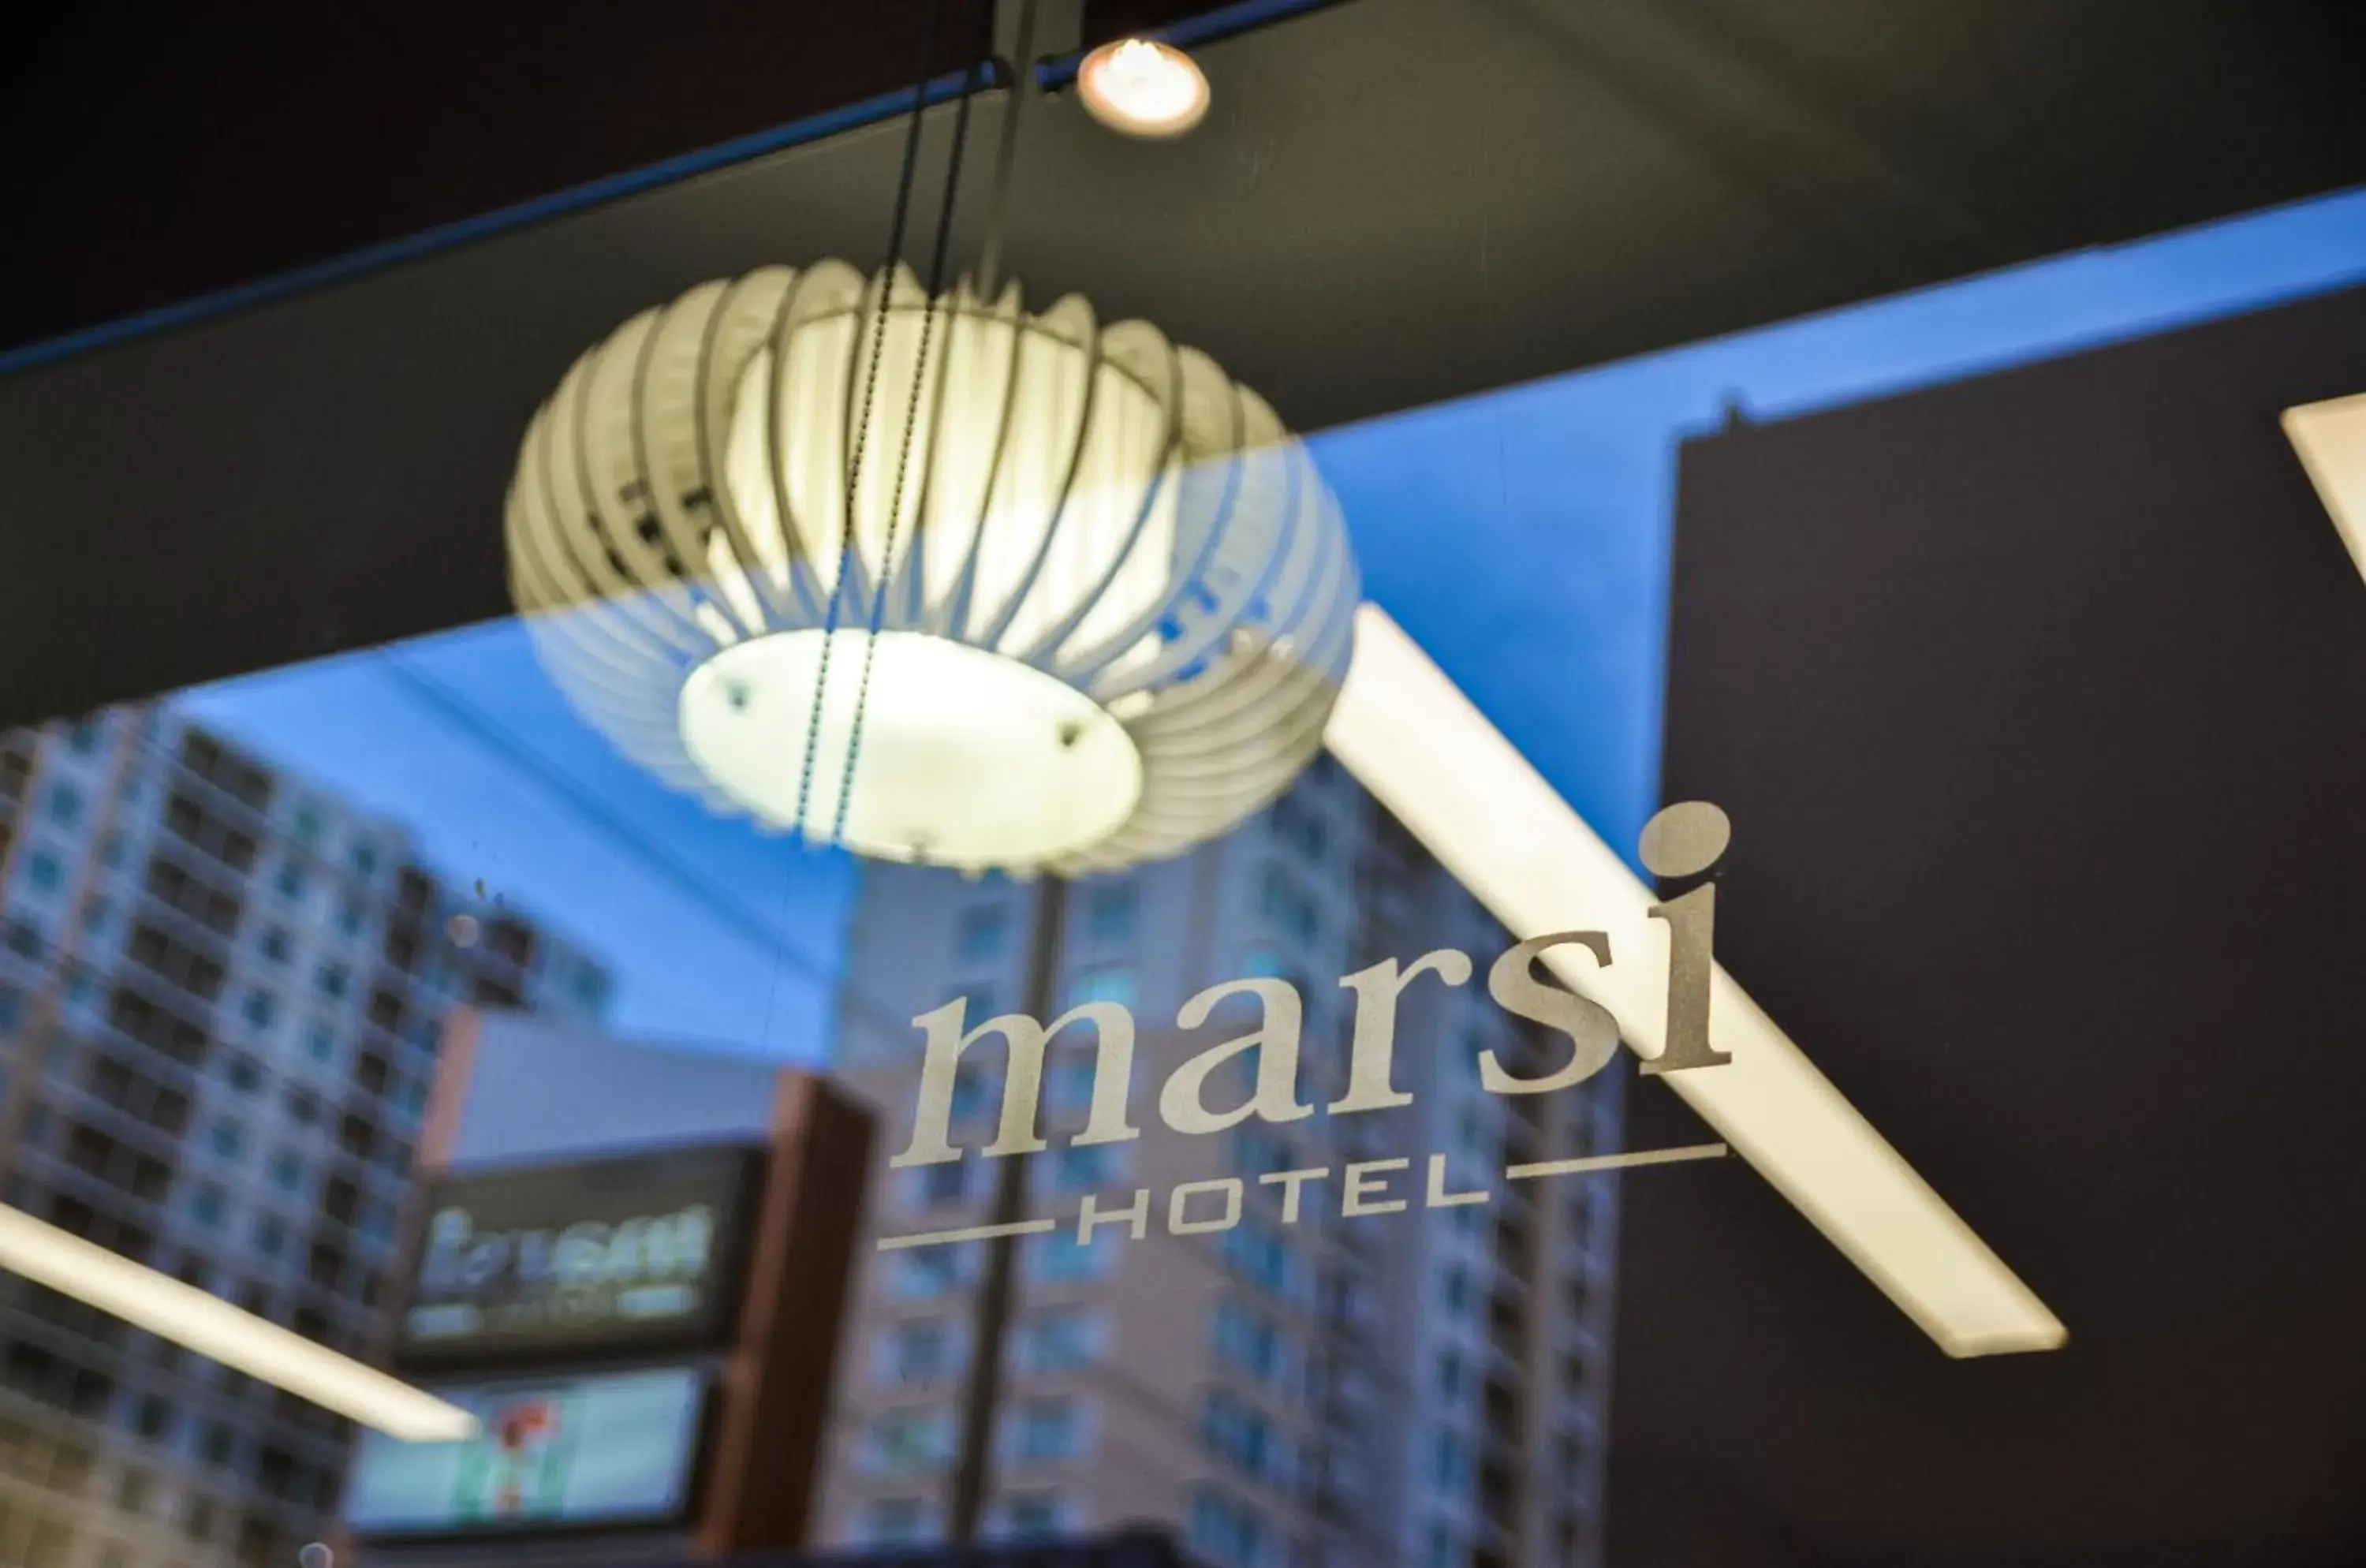 Property logo or sign in Marsi Hotel